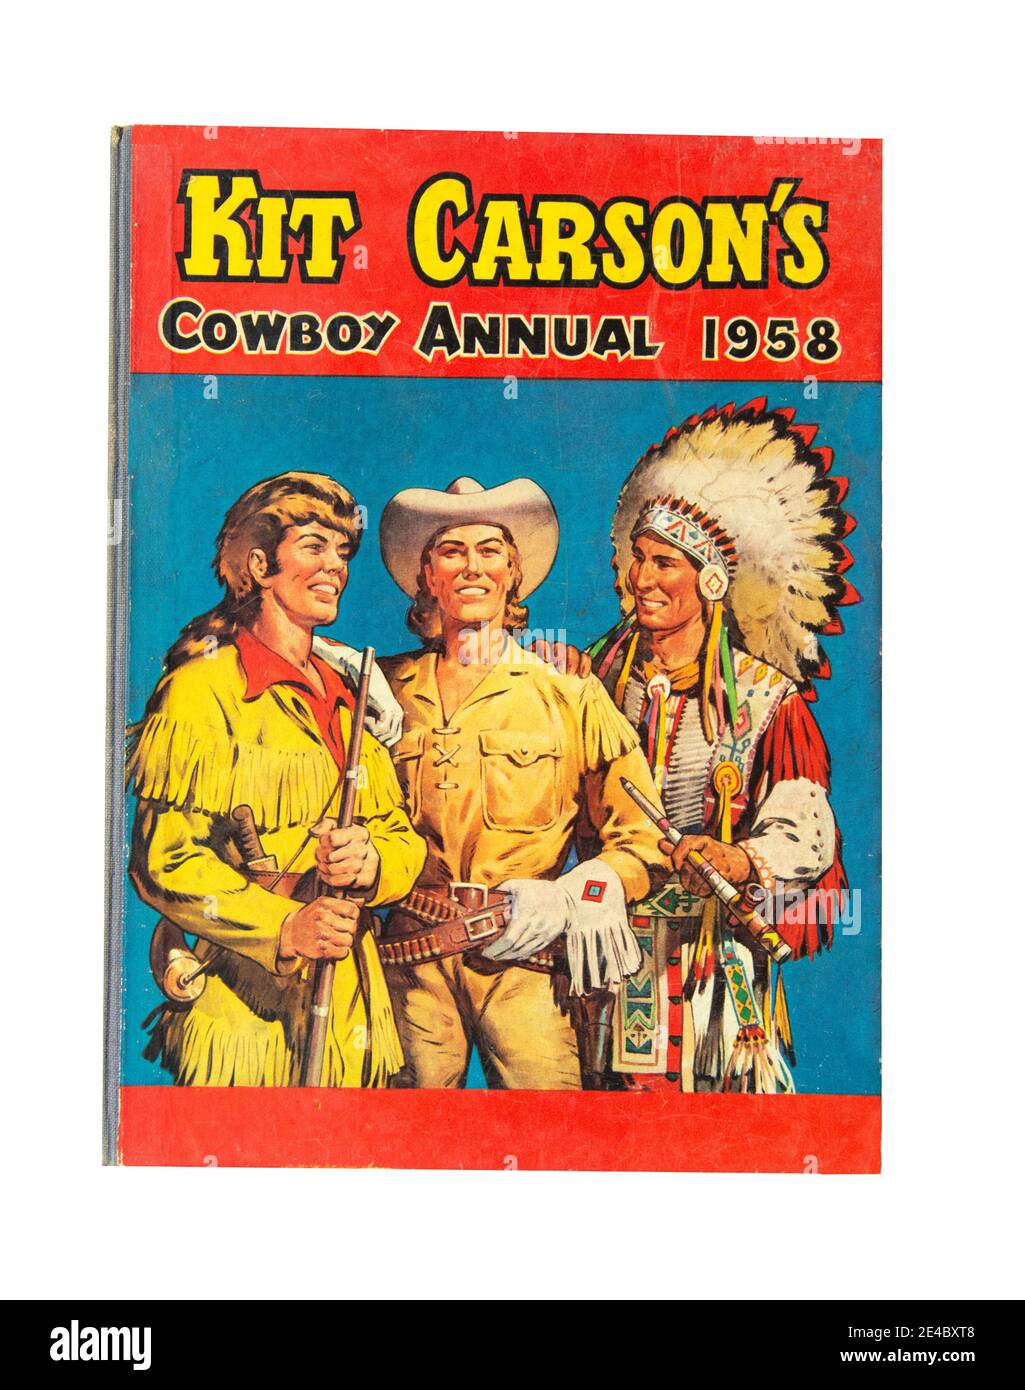 Kit Carson's Cowboy Annual 1958, Greater London, United Kingdom Stock Photo